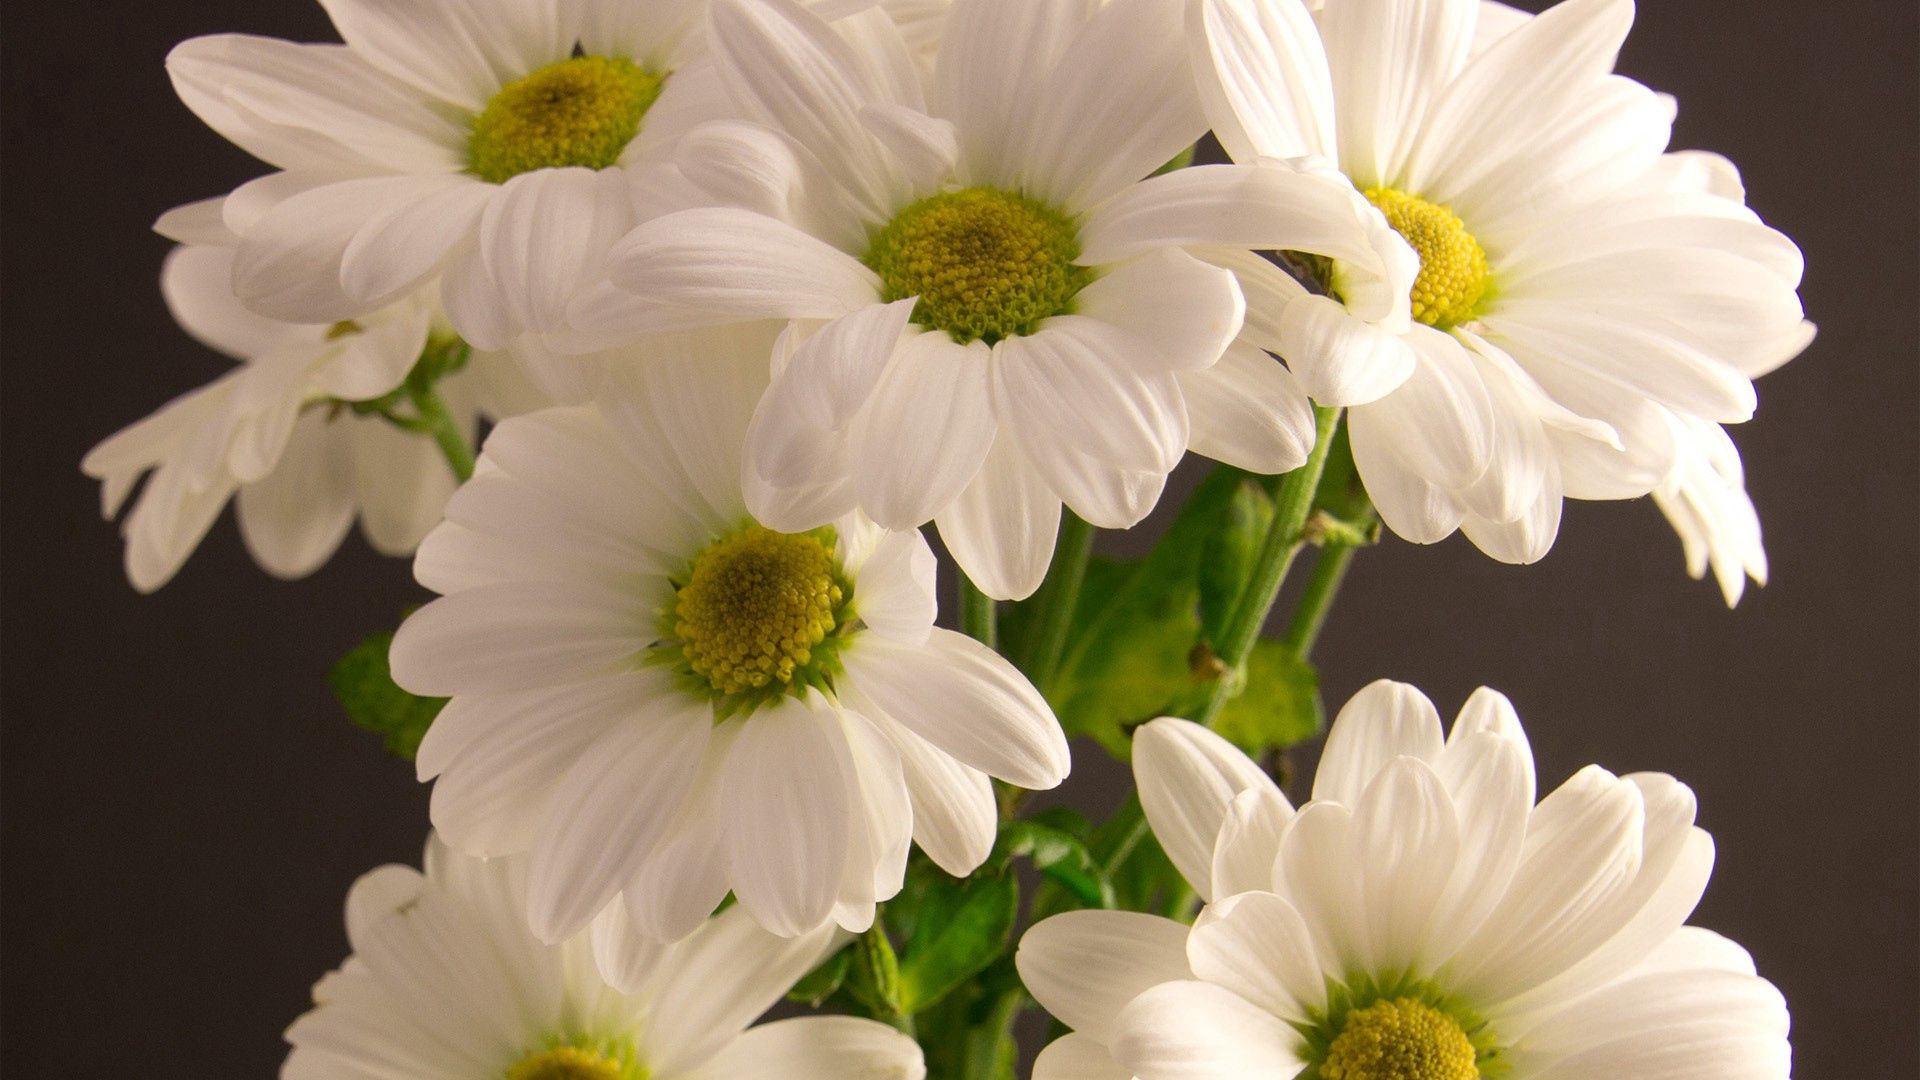 Download wallpaper 1920x1080 bouquet, flowers, petals, white full hd, hdtv,  fhd, 1080p hd background